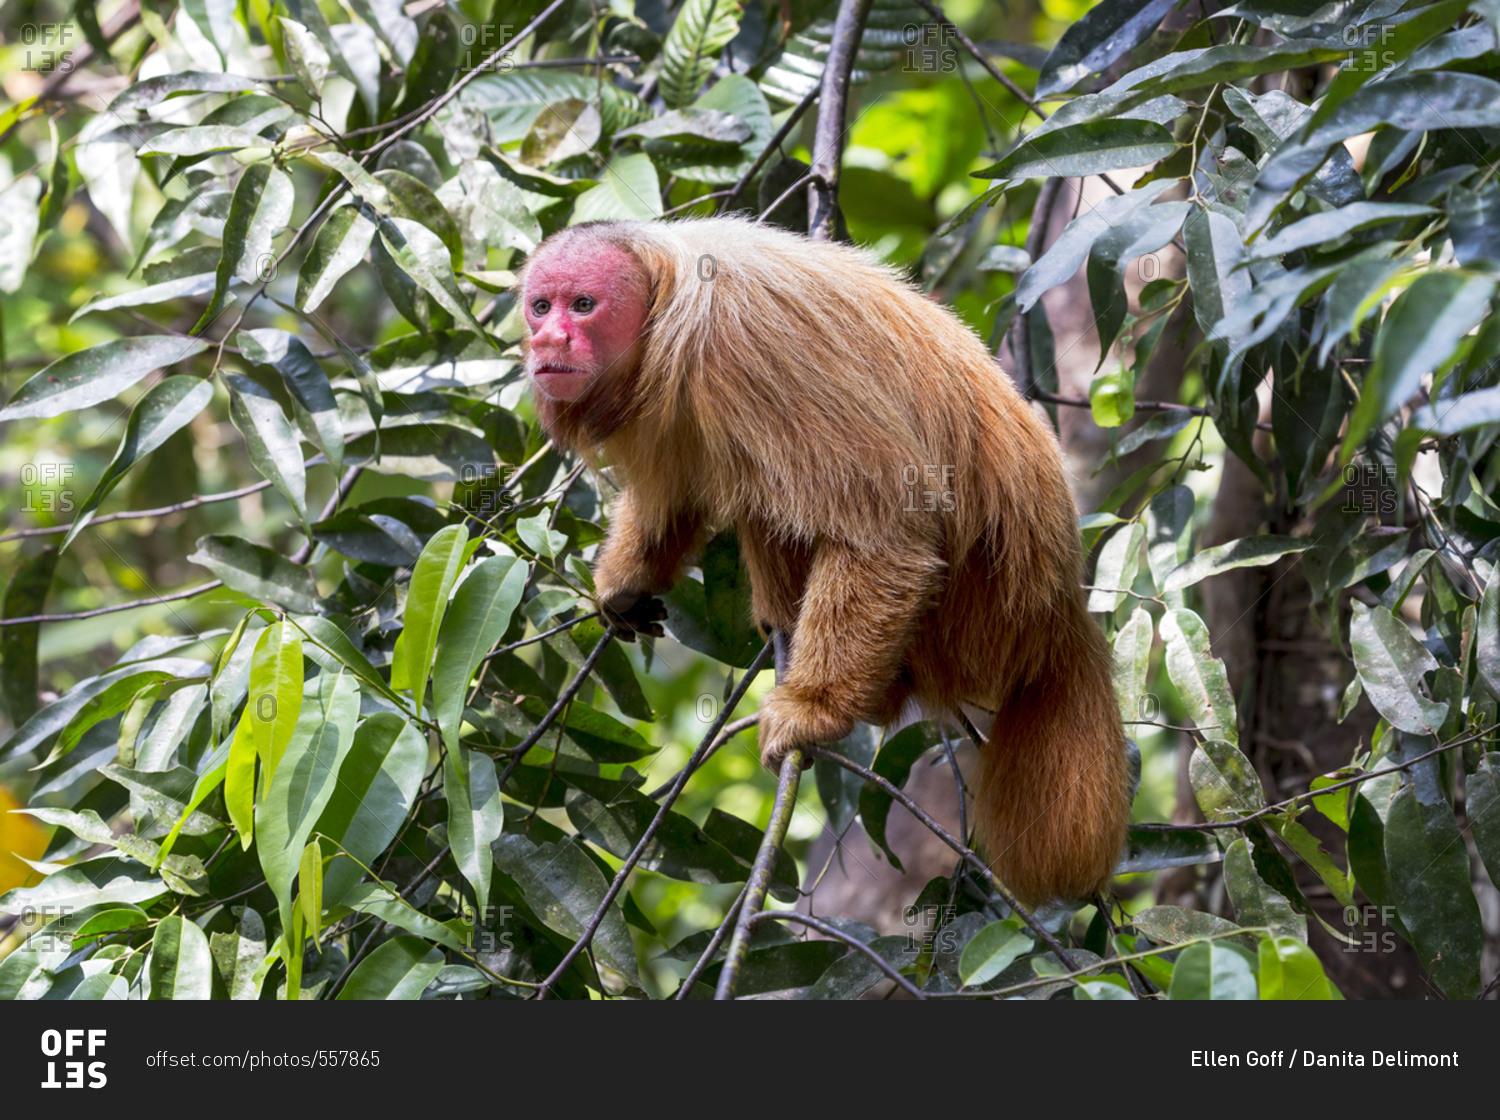 South America, Brazil, Amazon, Manaus, Amazon EcoPark Jungle Lodge, Portrait of a bald uakari monkey in the trees.